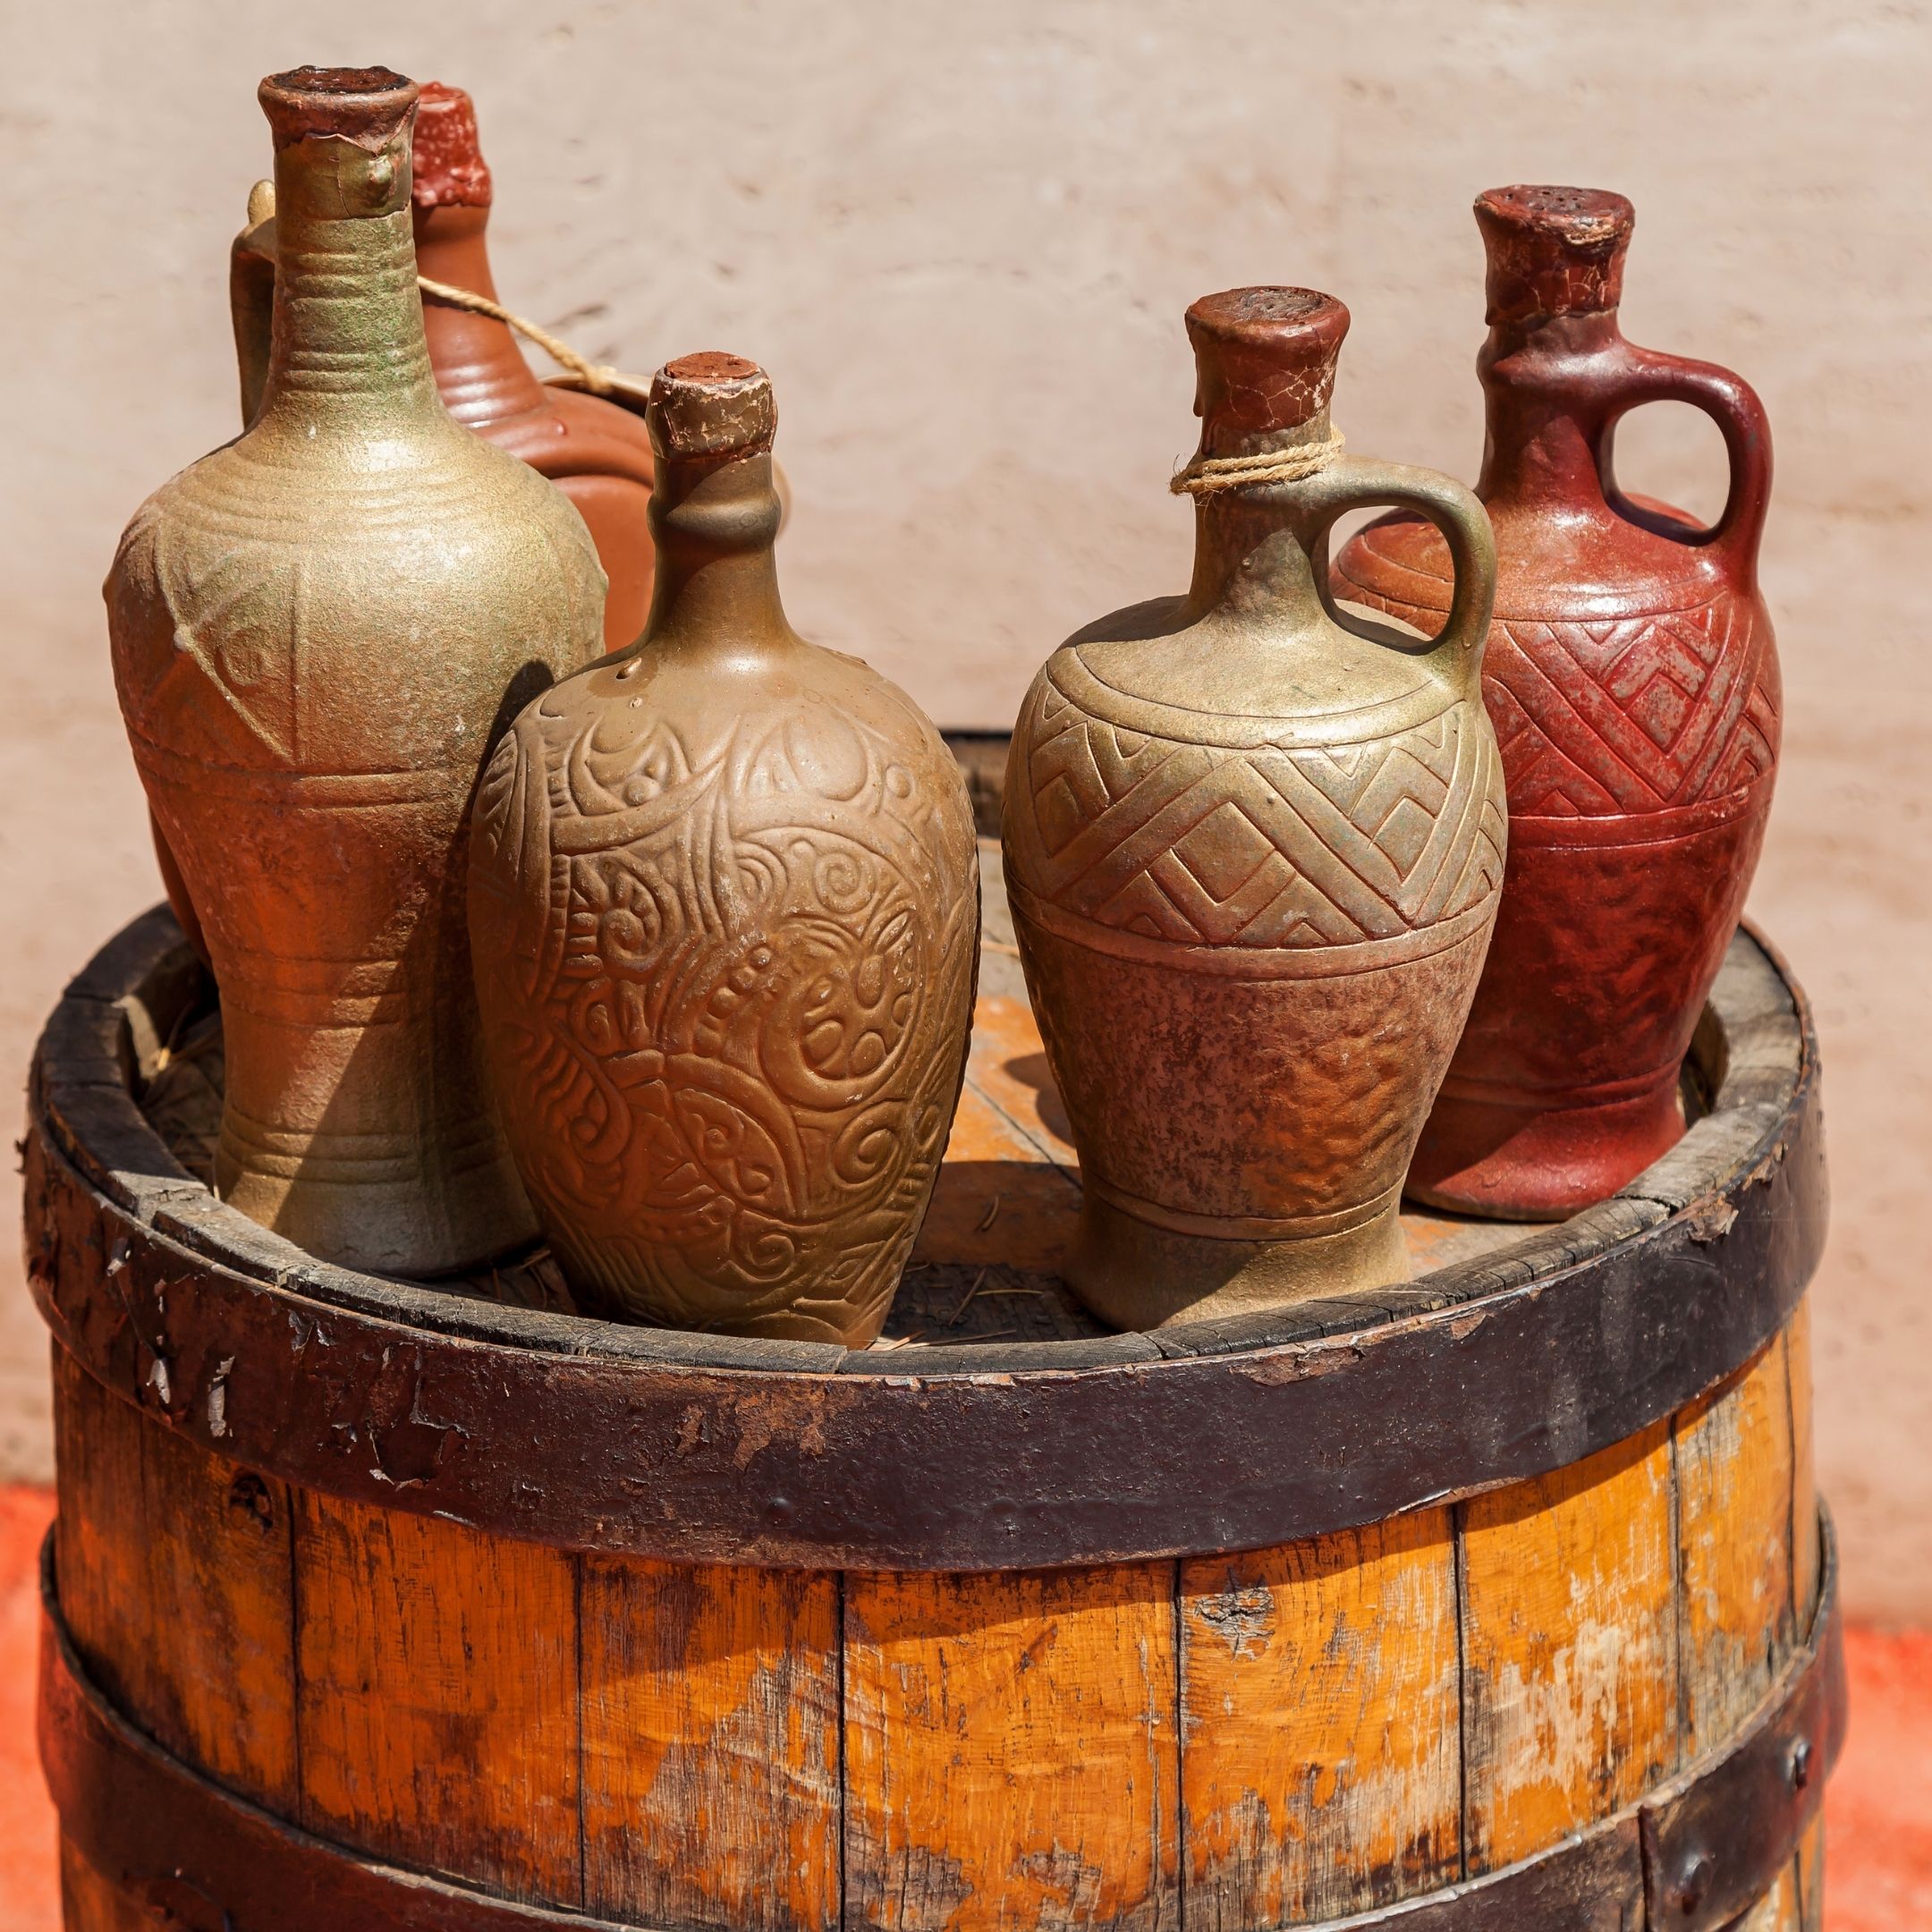 Wine barrel with ancient wine jars